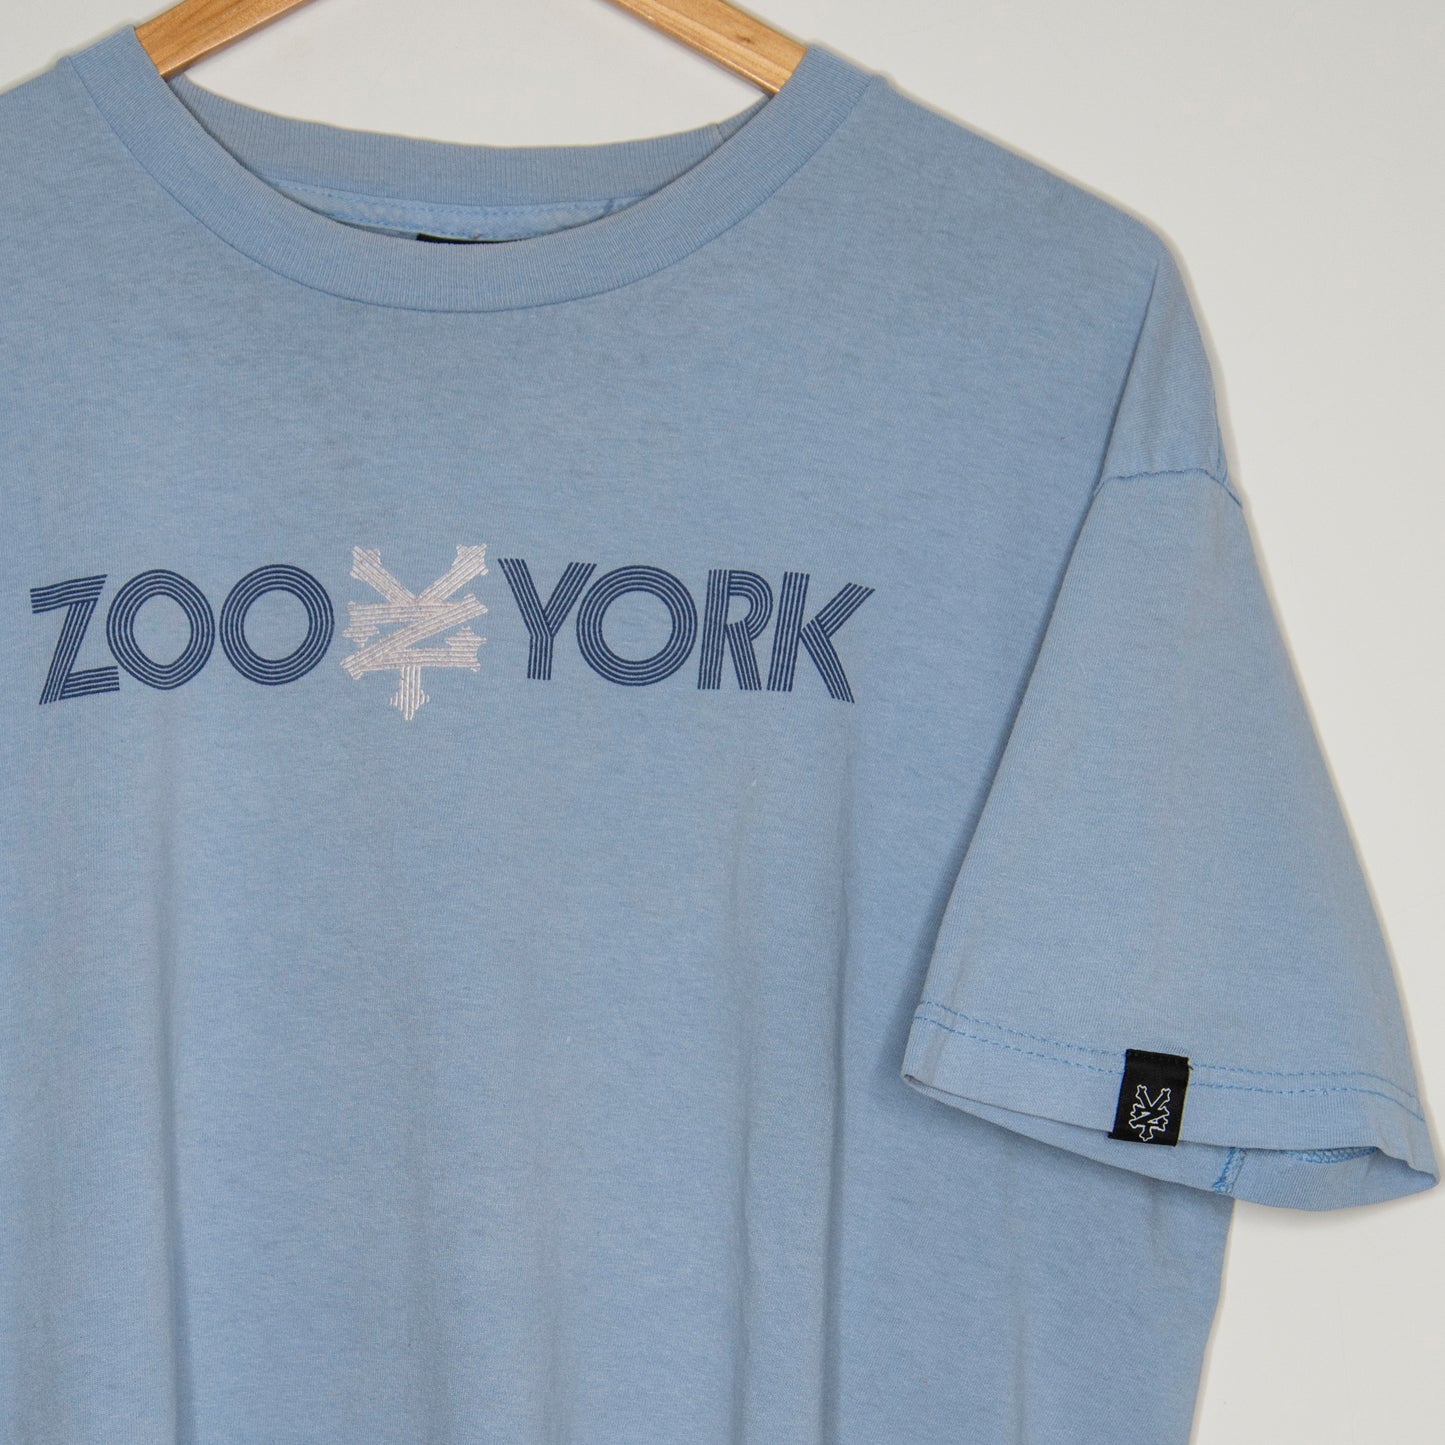 2000's Zoo York T-Shirt Large